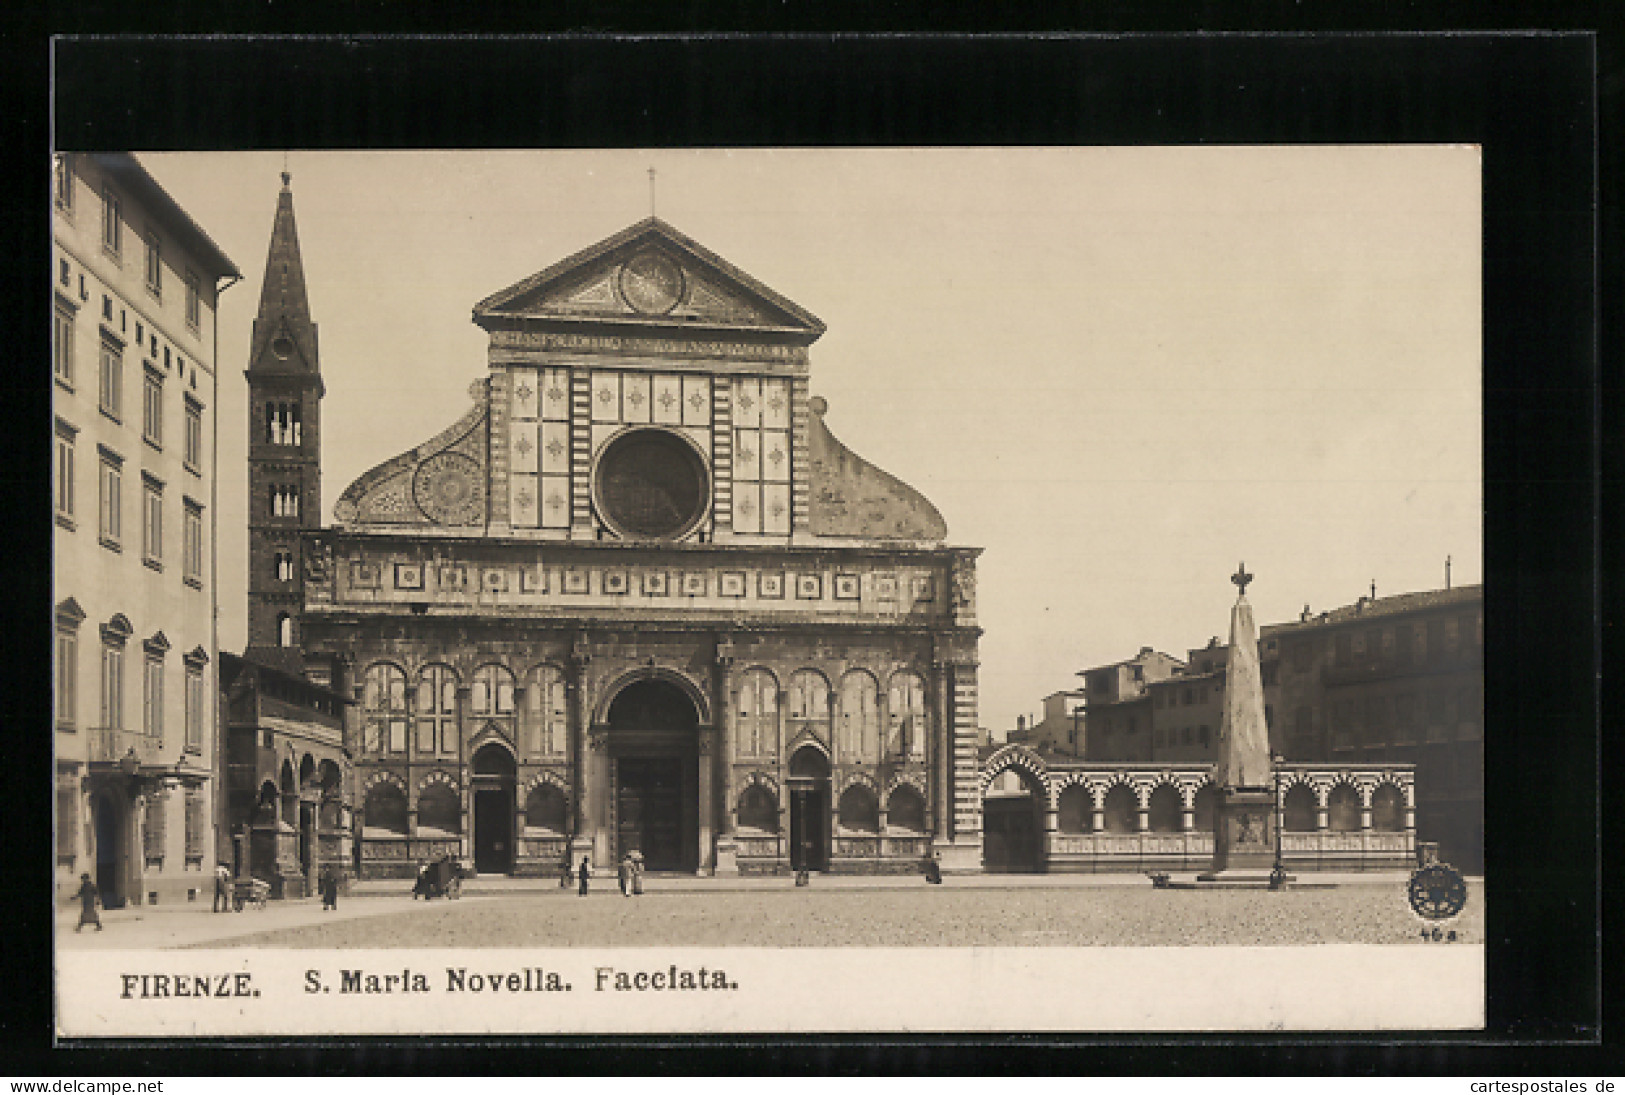 Cartolina Firenze, S. Maria Novella, Facciata  - Firenze (Florence)